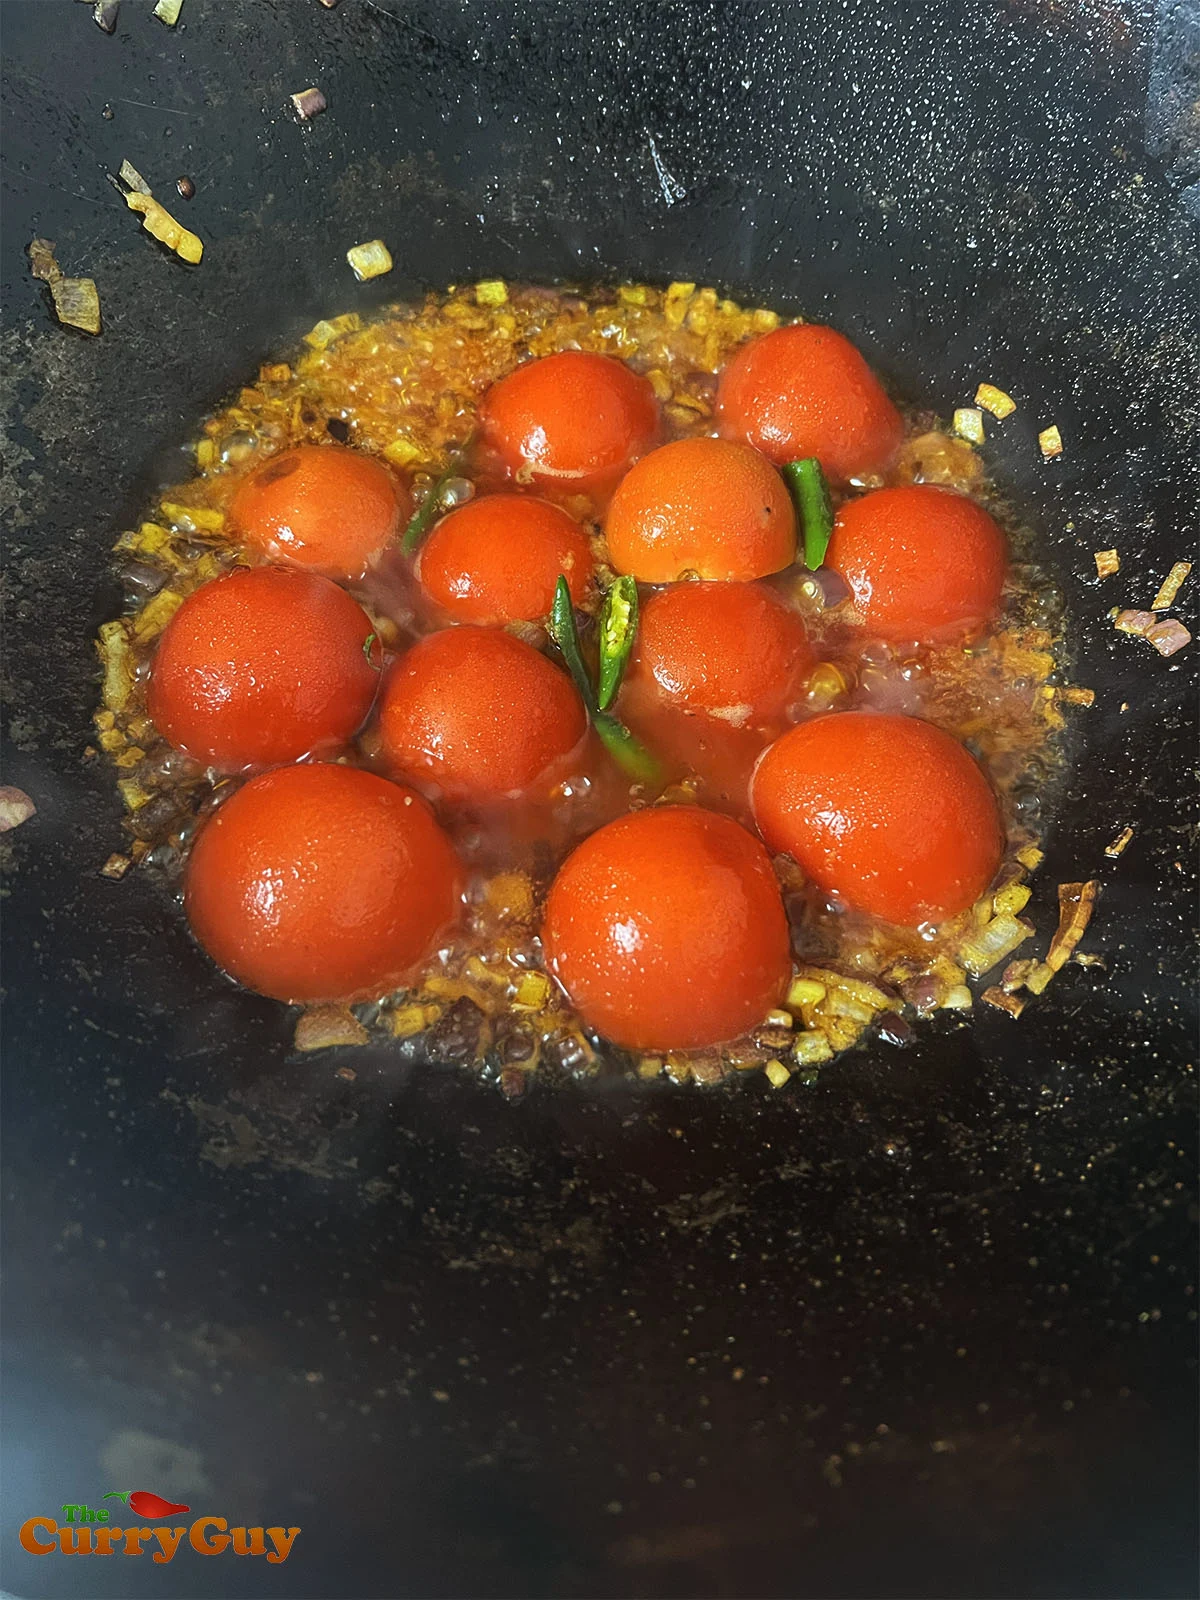 Adding tomatoes to the karahi